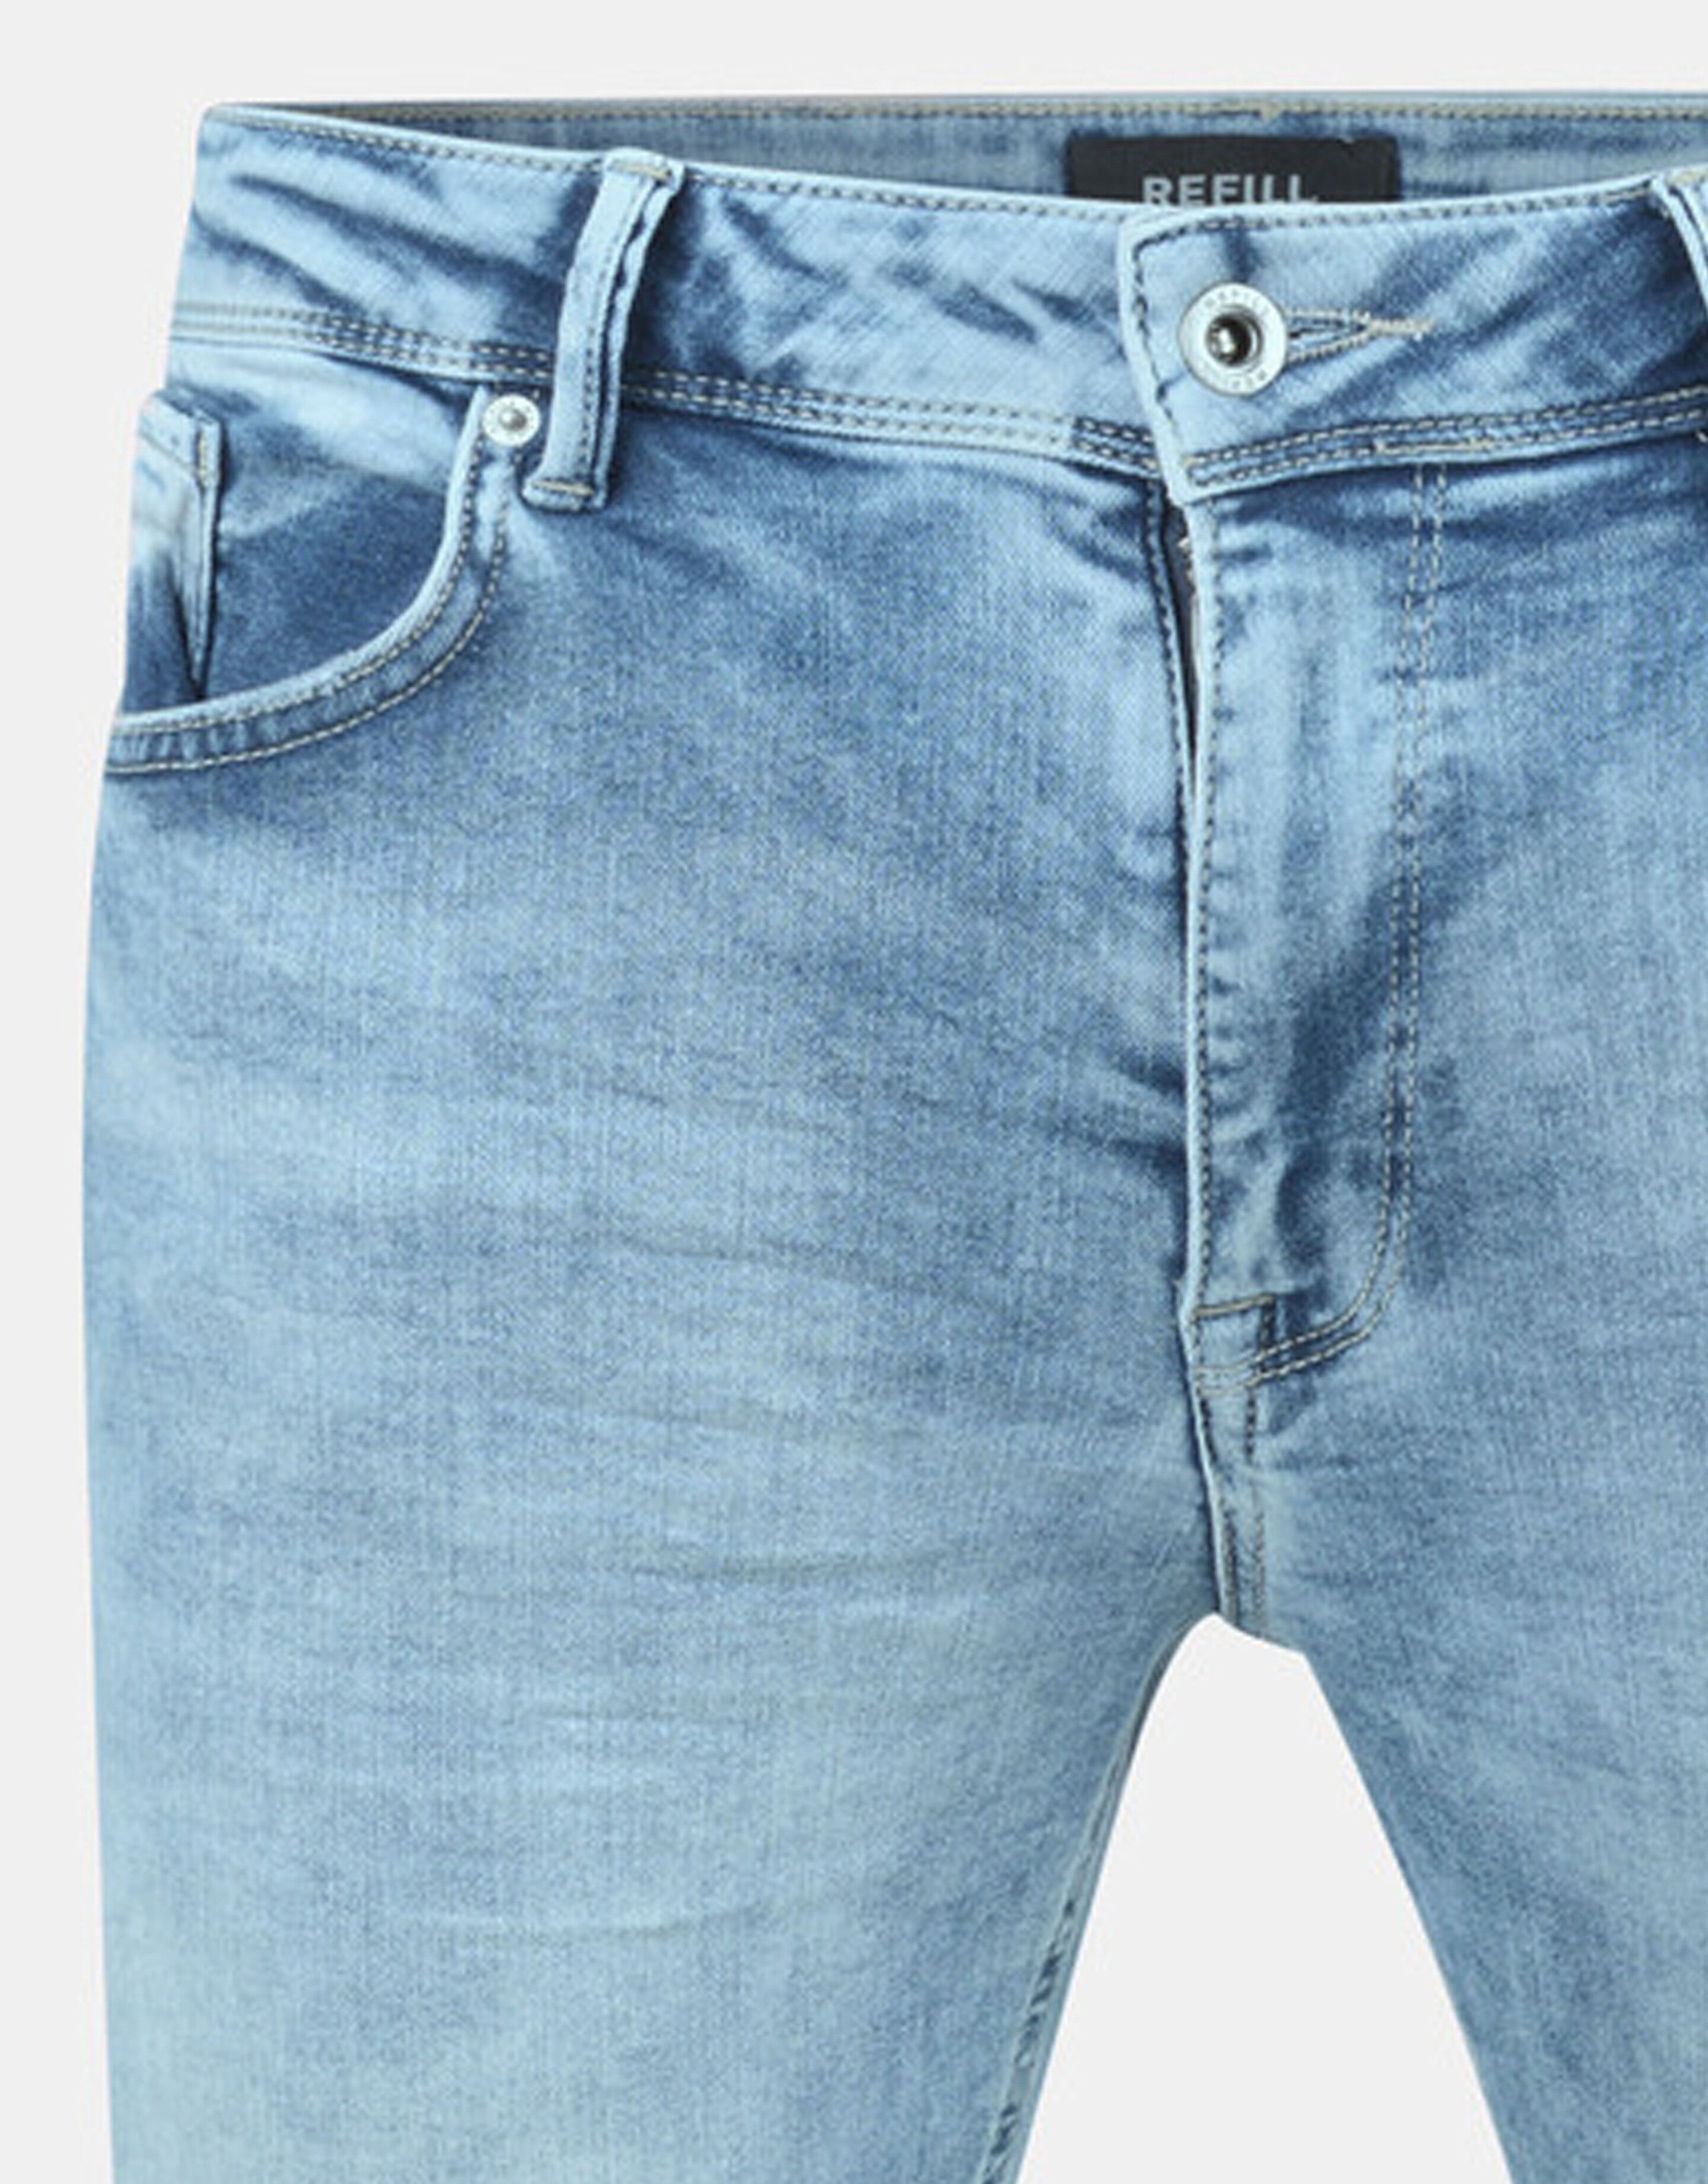 Lucas Slim Ametist Jeans L34 Refill